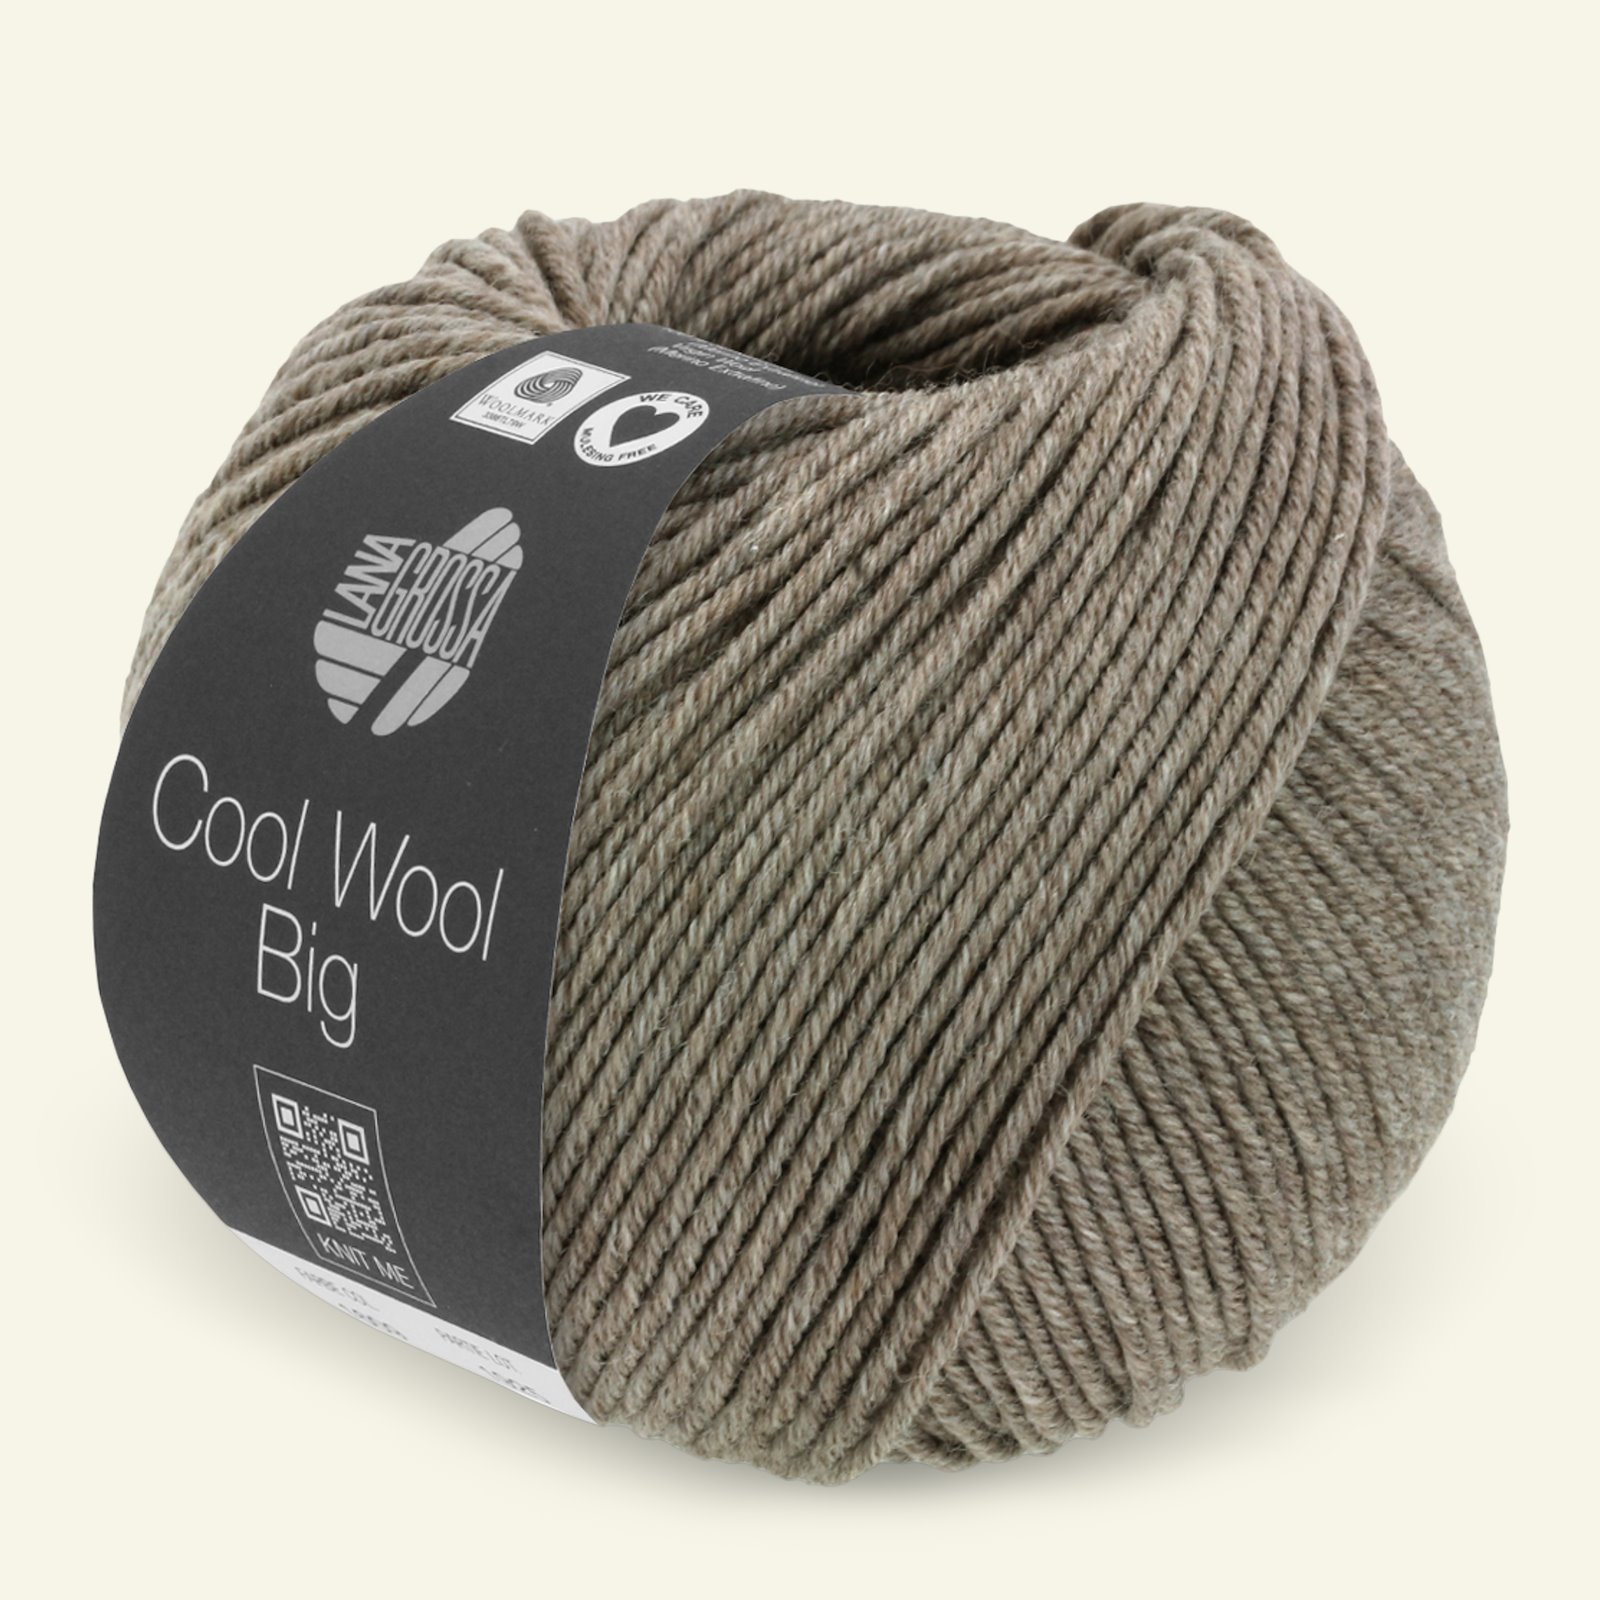 Lana Grossa, extrafine merino ullgarn "Cool Wool Big", gråbeige mel. 90001094_pack